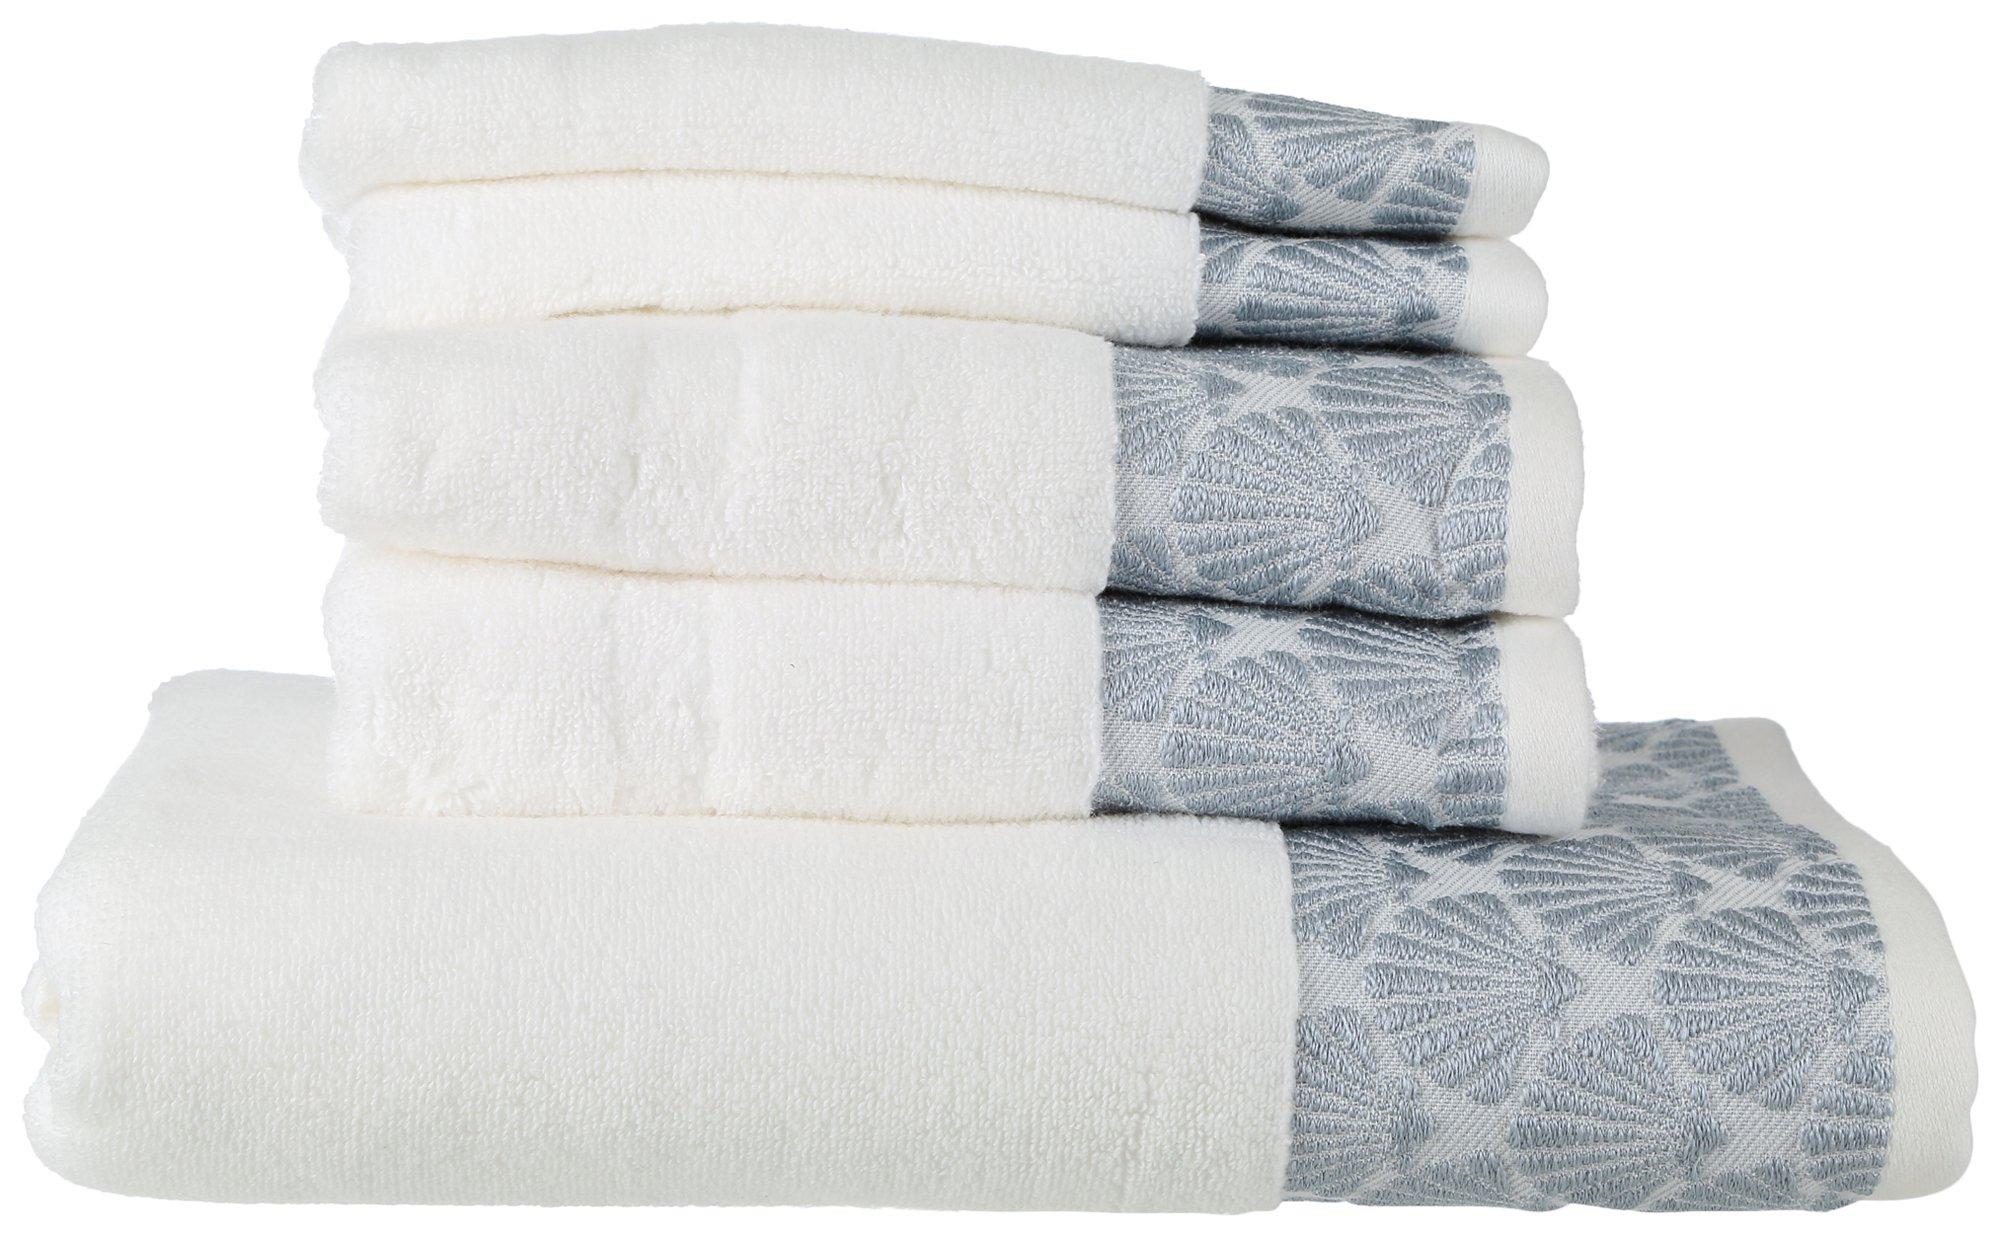 Caro Home Basketweave Towel Collection Bath Towel Blue Multi